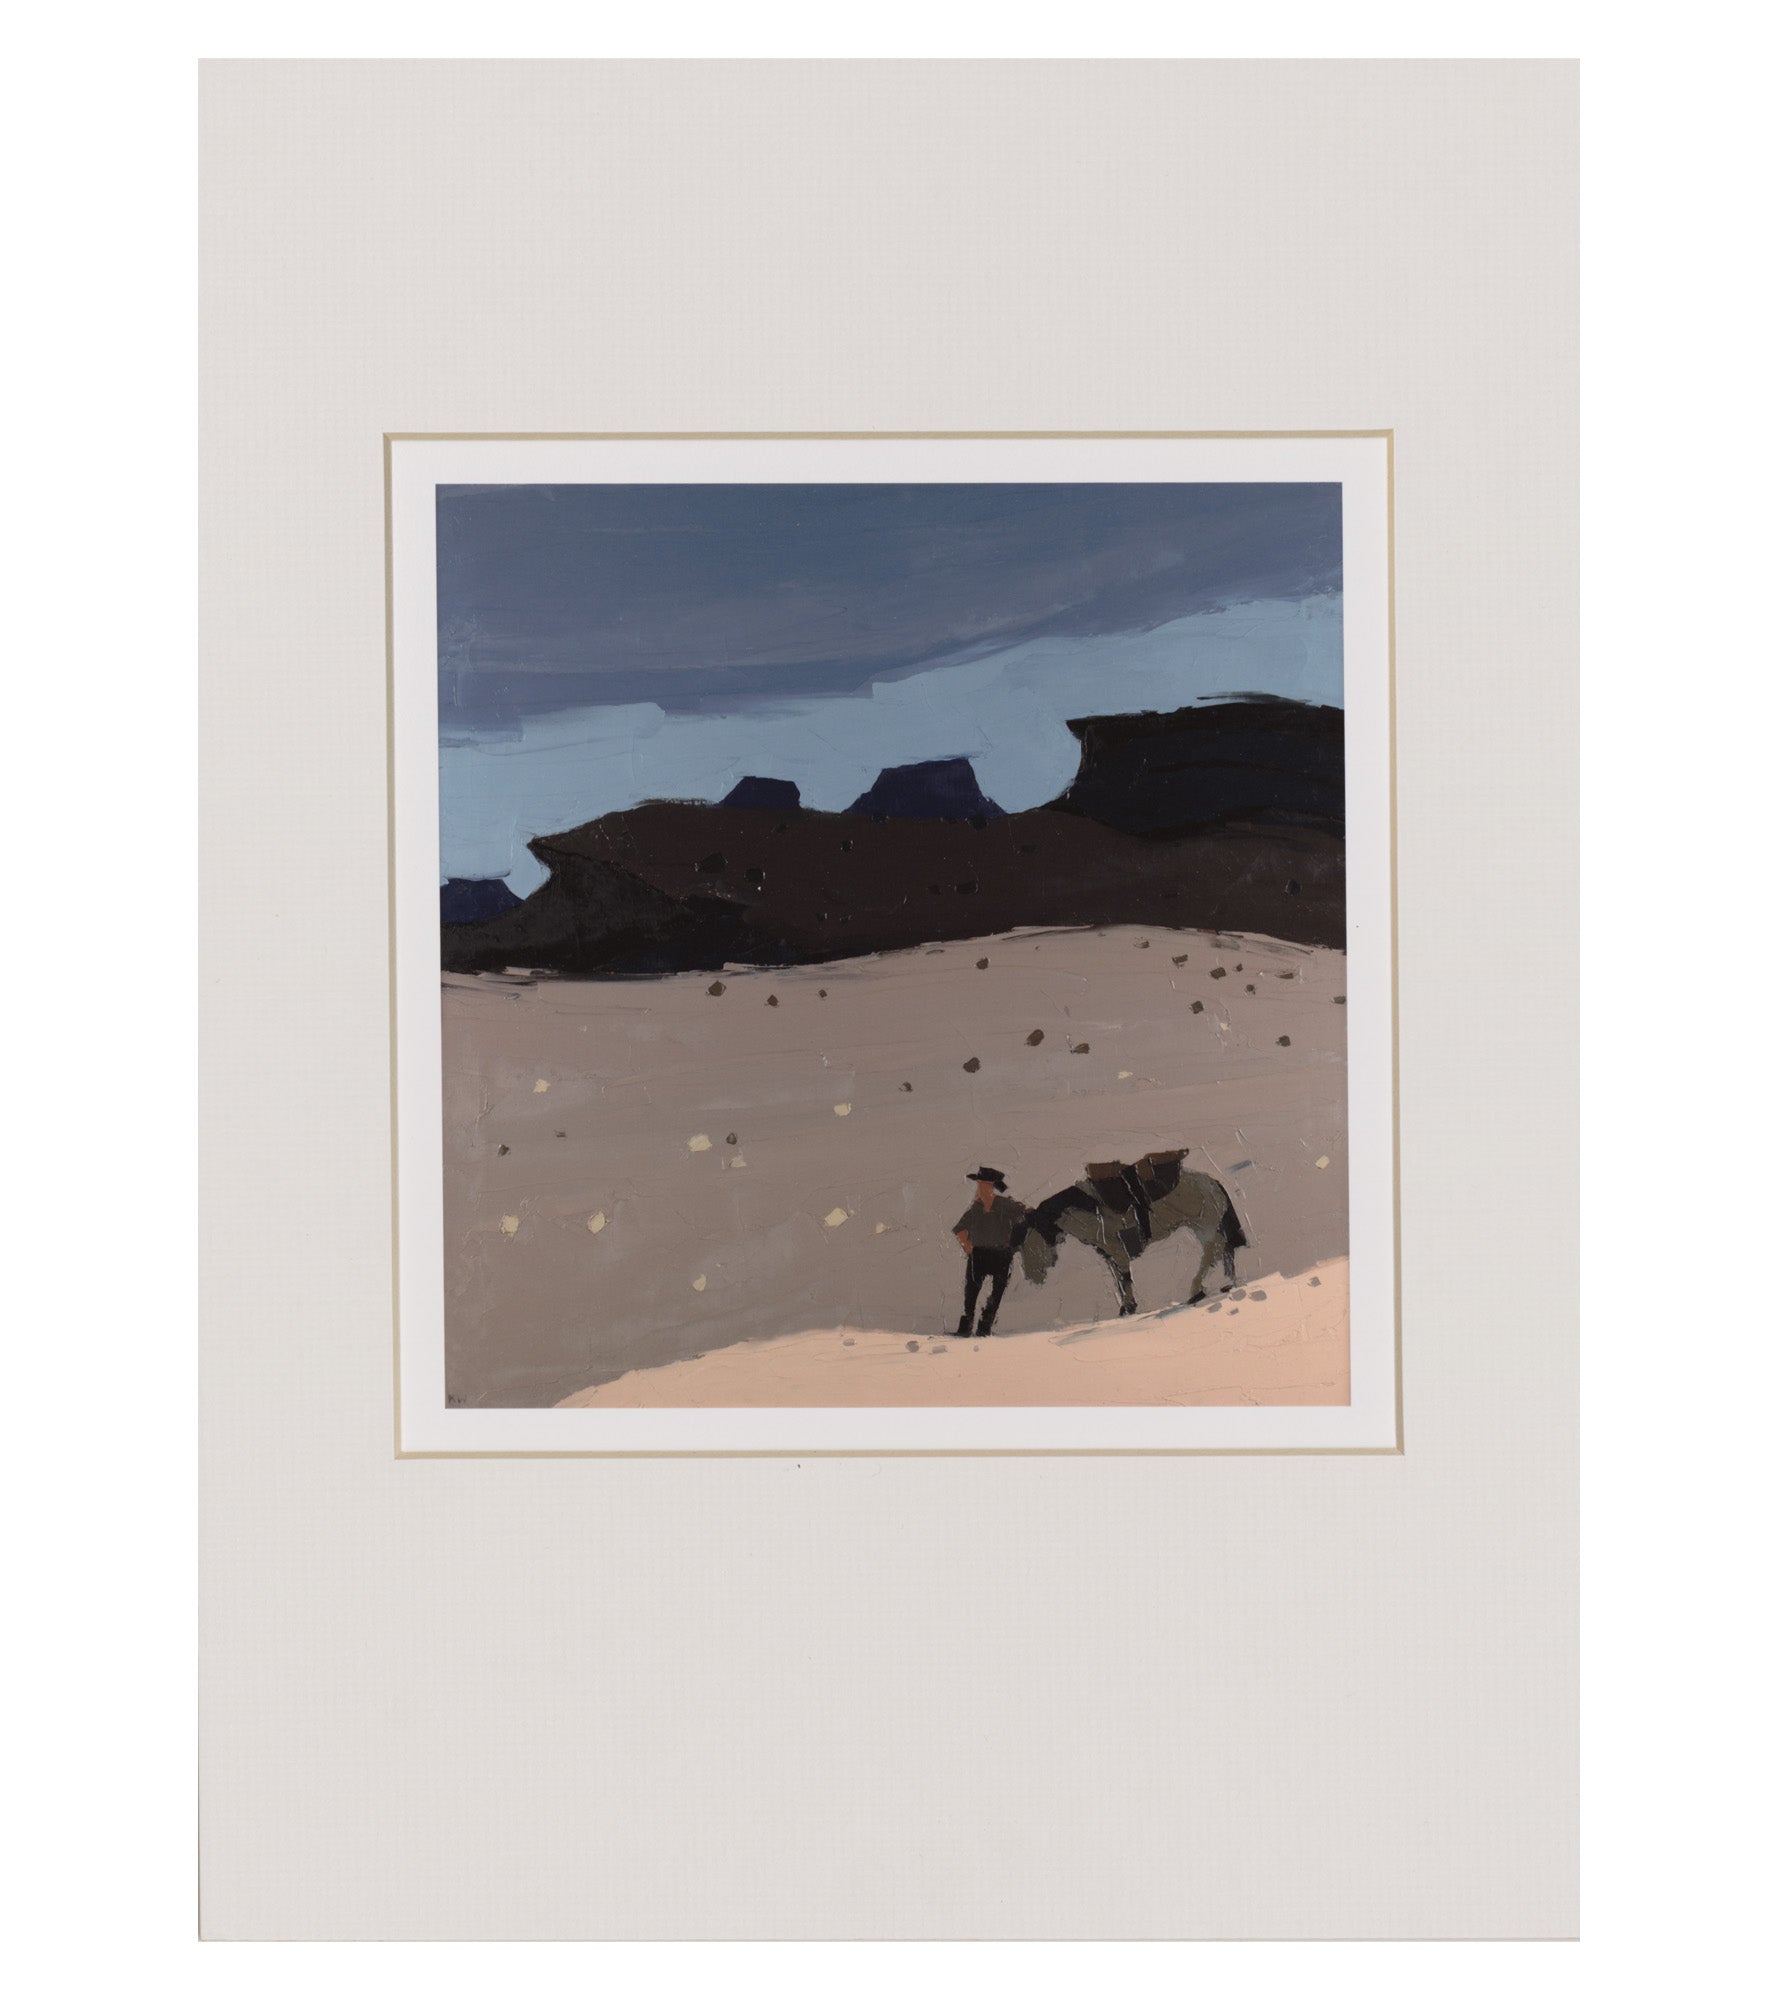 Man and Horse in Desert - Sir Kyffin Williams Print